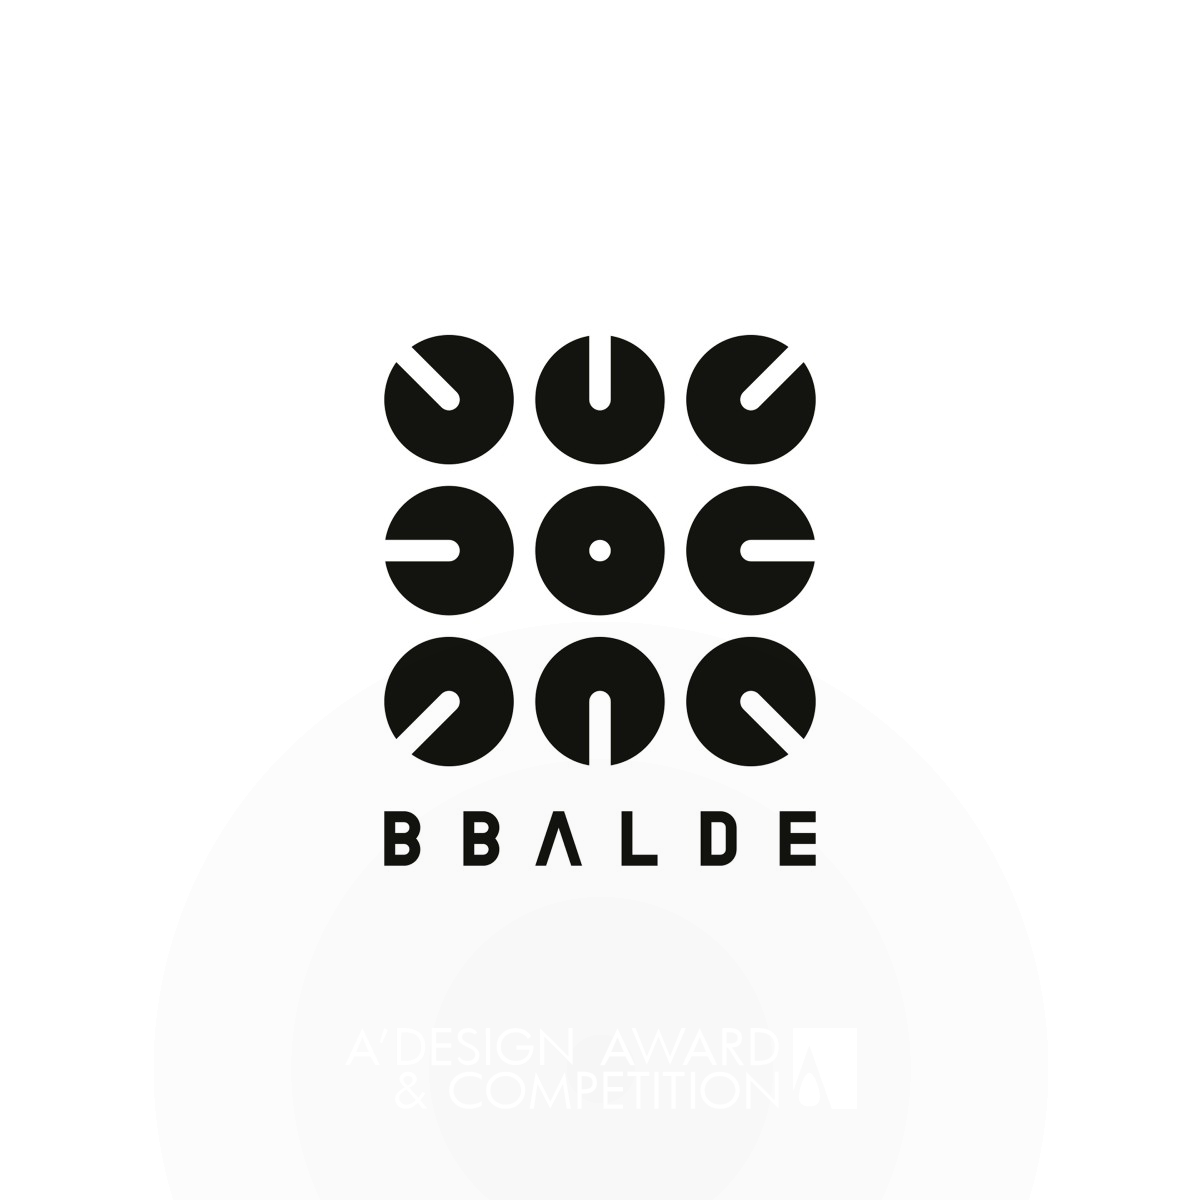 Bbalde Service Logo, Symbol and App by Heeok Cho